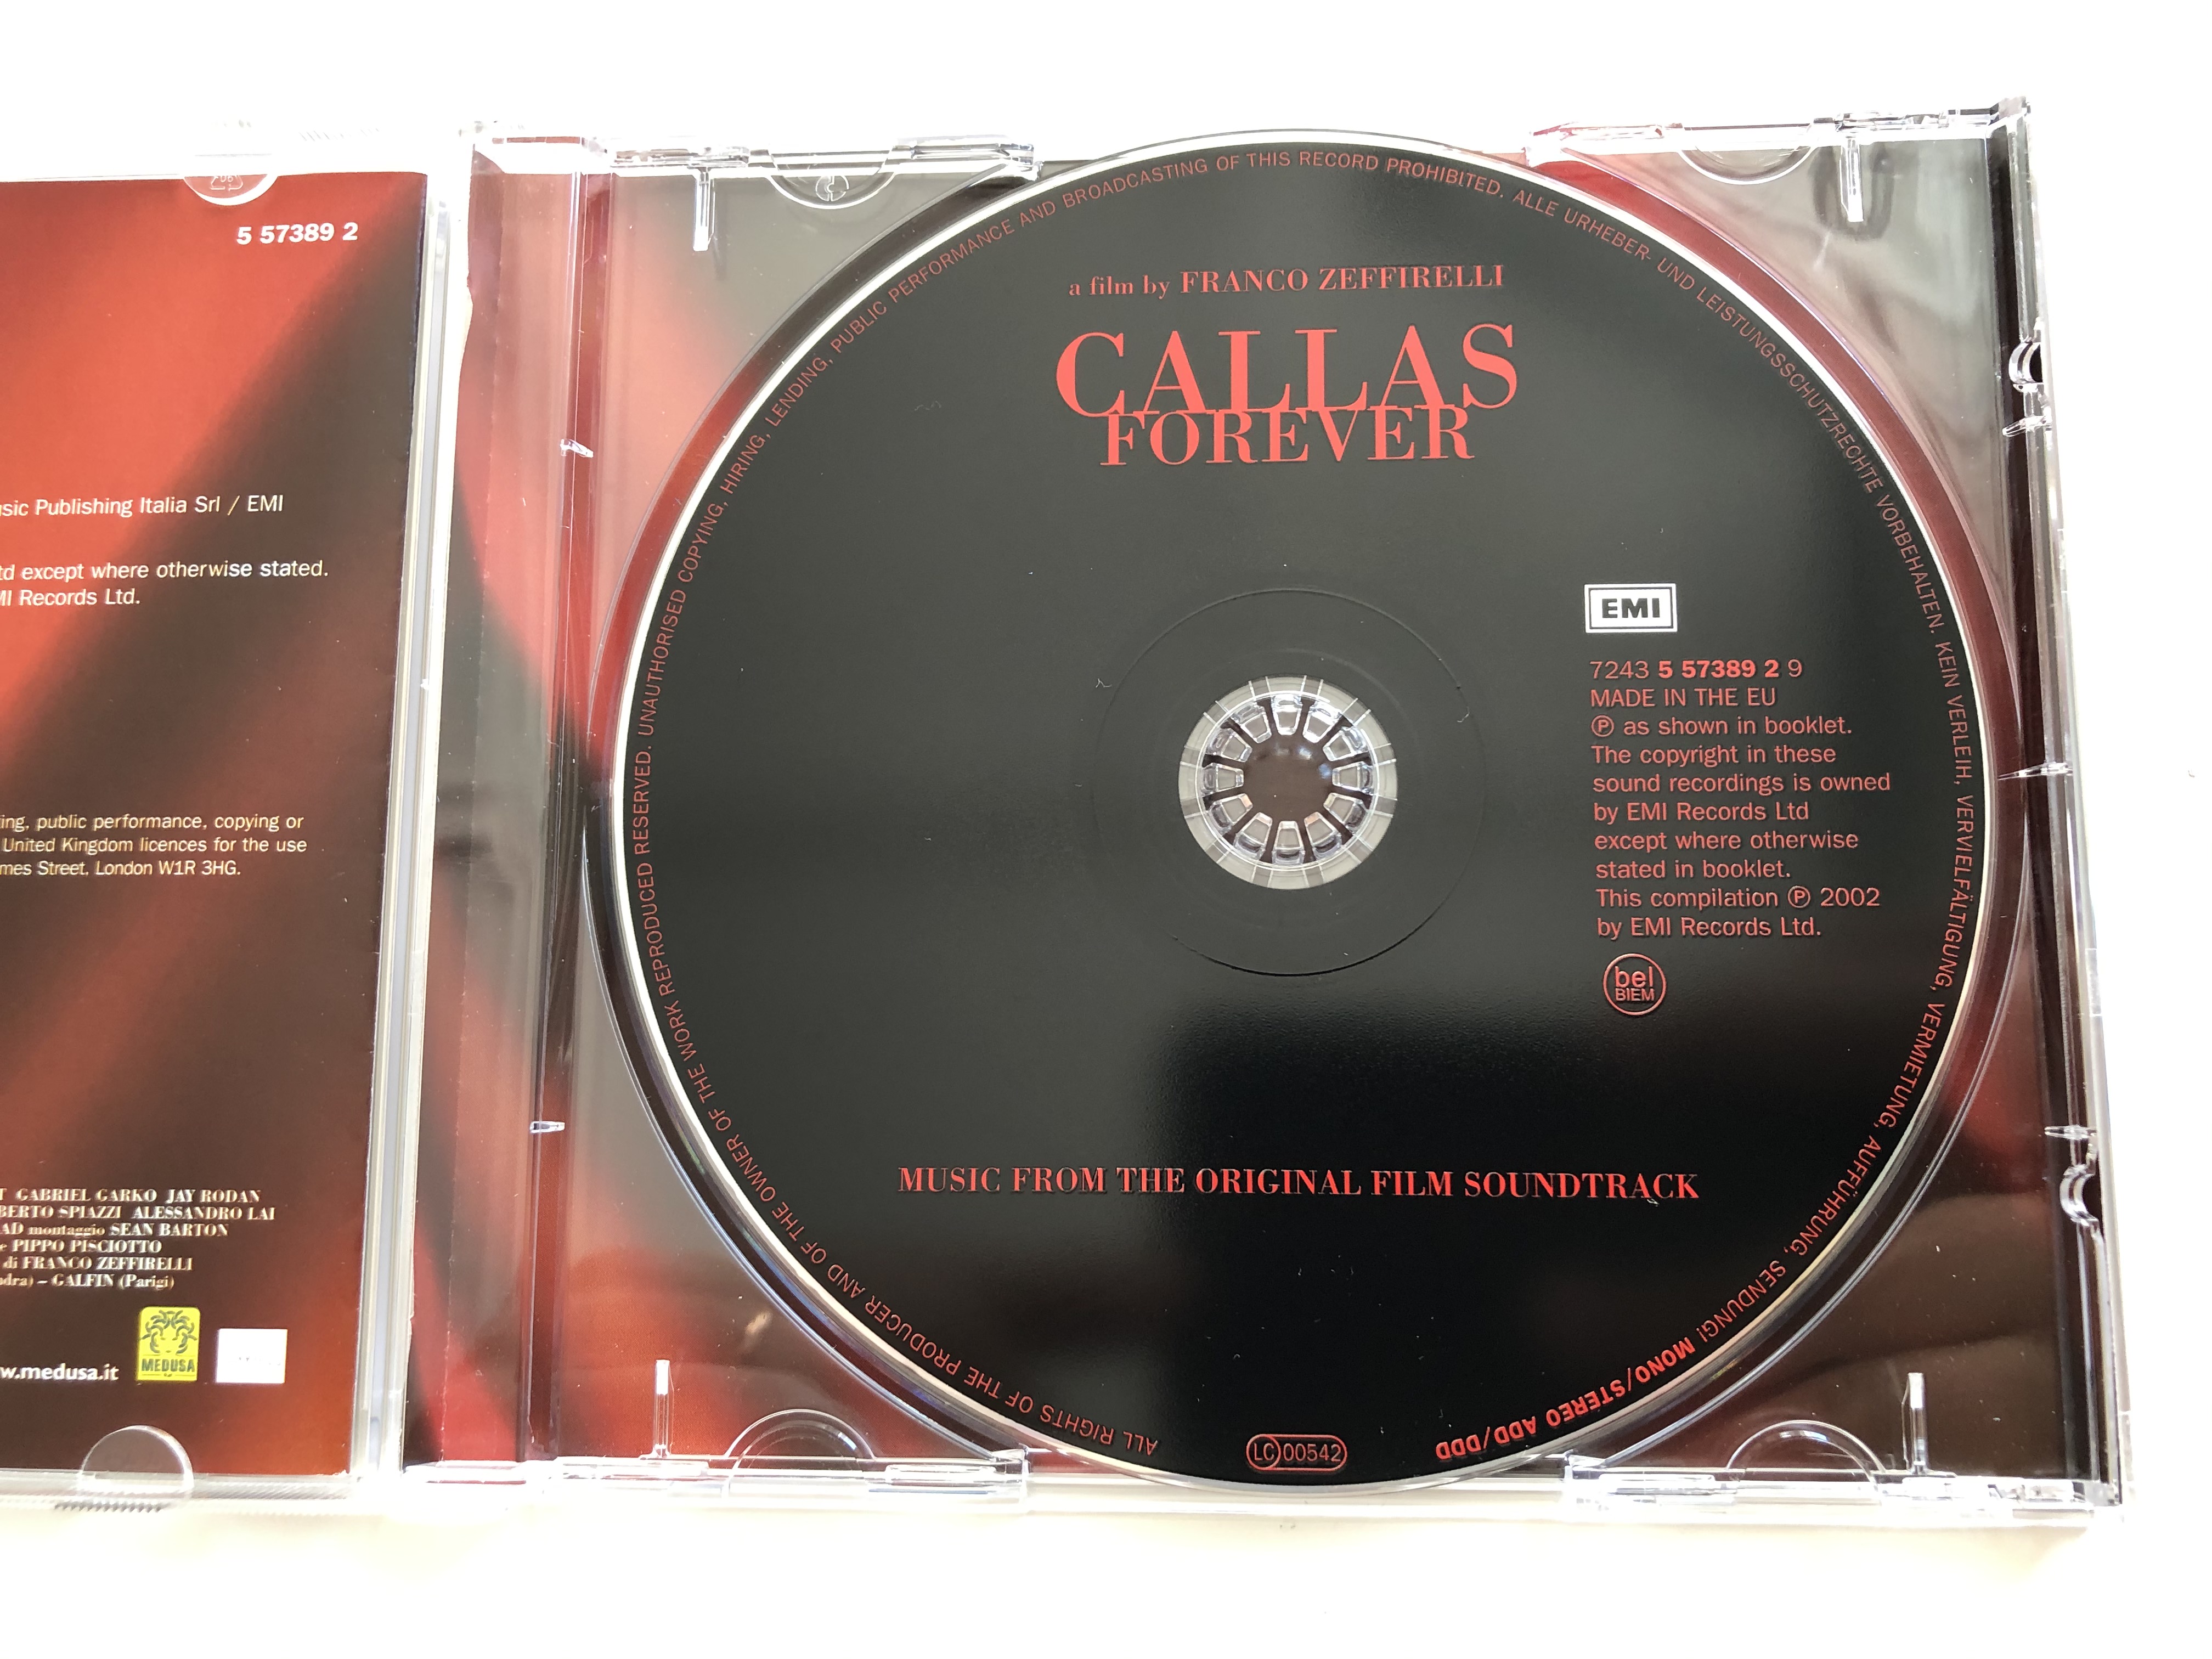 callas-forever-original-film-soundtrack-a-film-by-franco-zeffirelli-fanny-ardant-jeremy-irons-emi-audio-cd-2002-mono-stereo-5-57396-2-6-.jpg